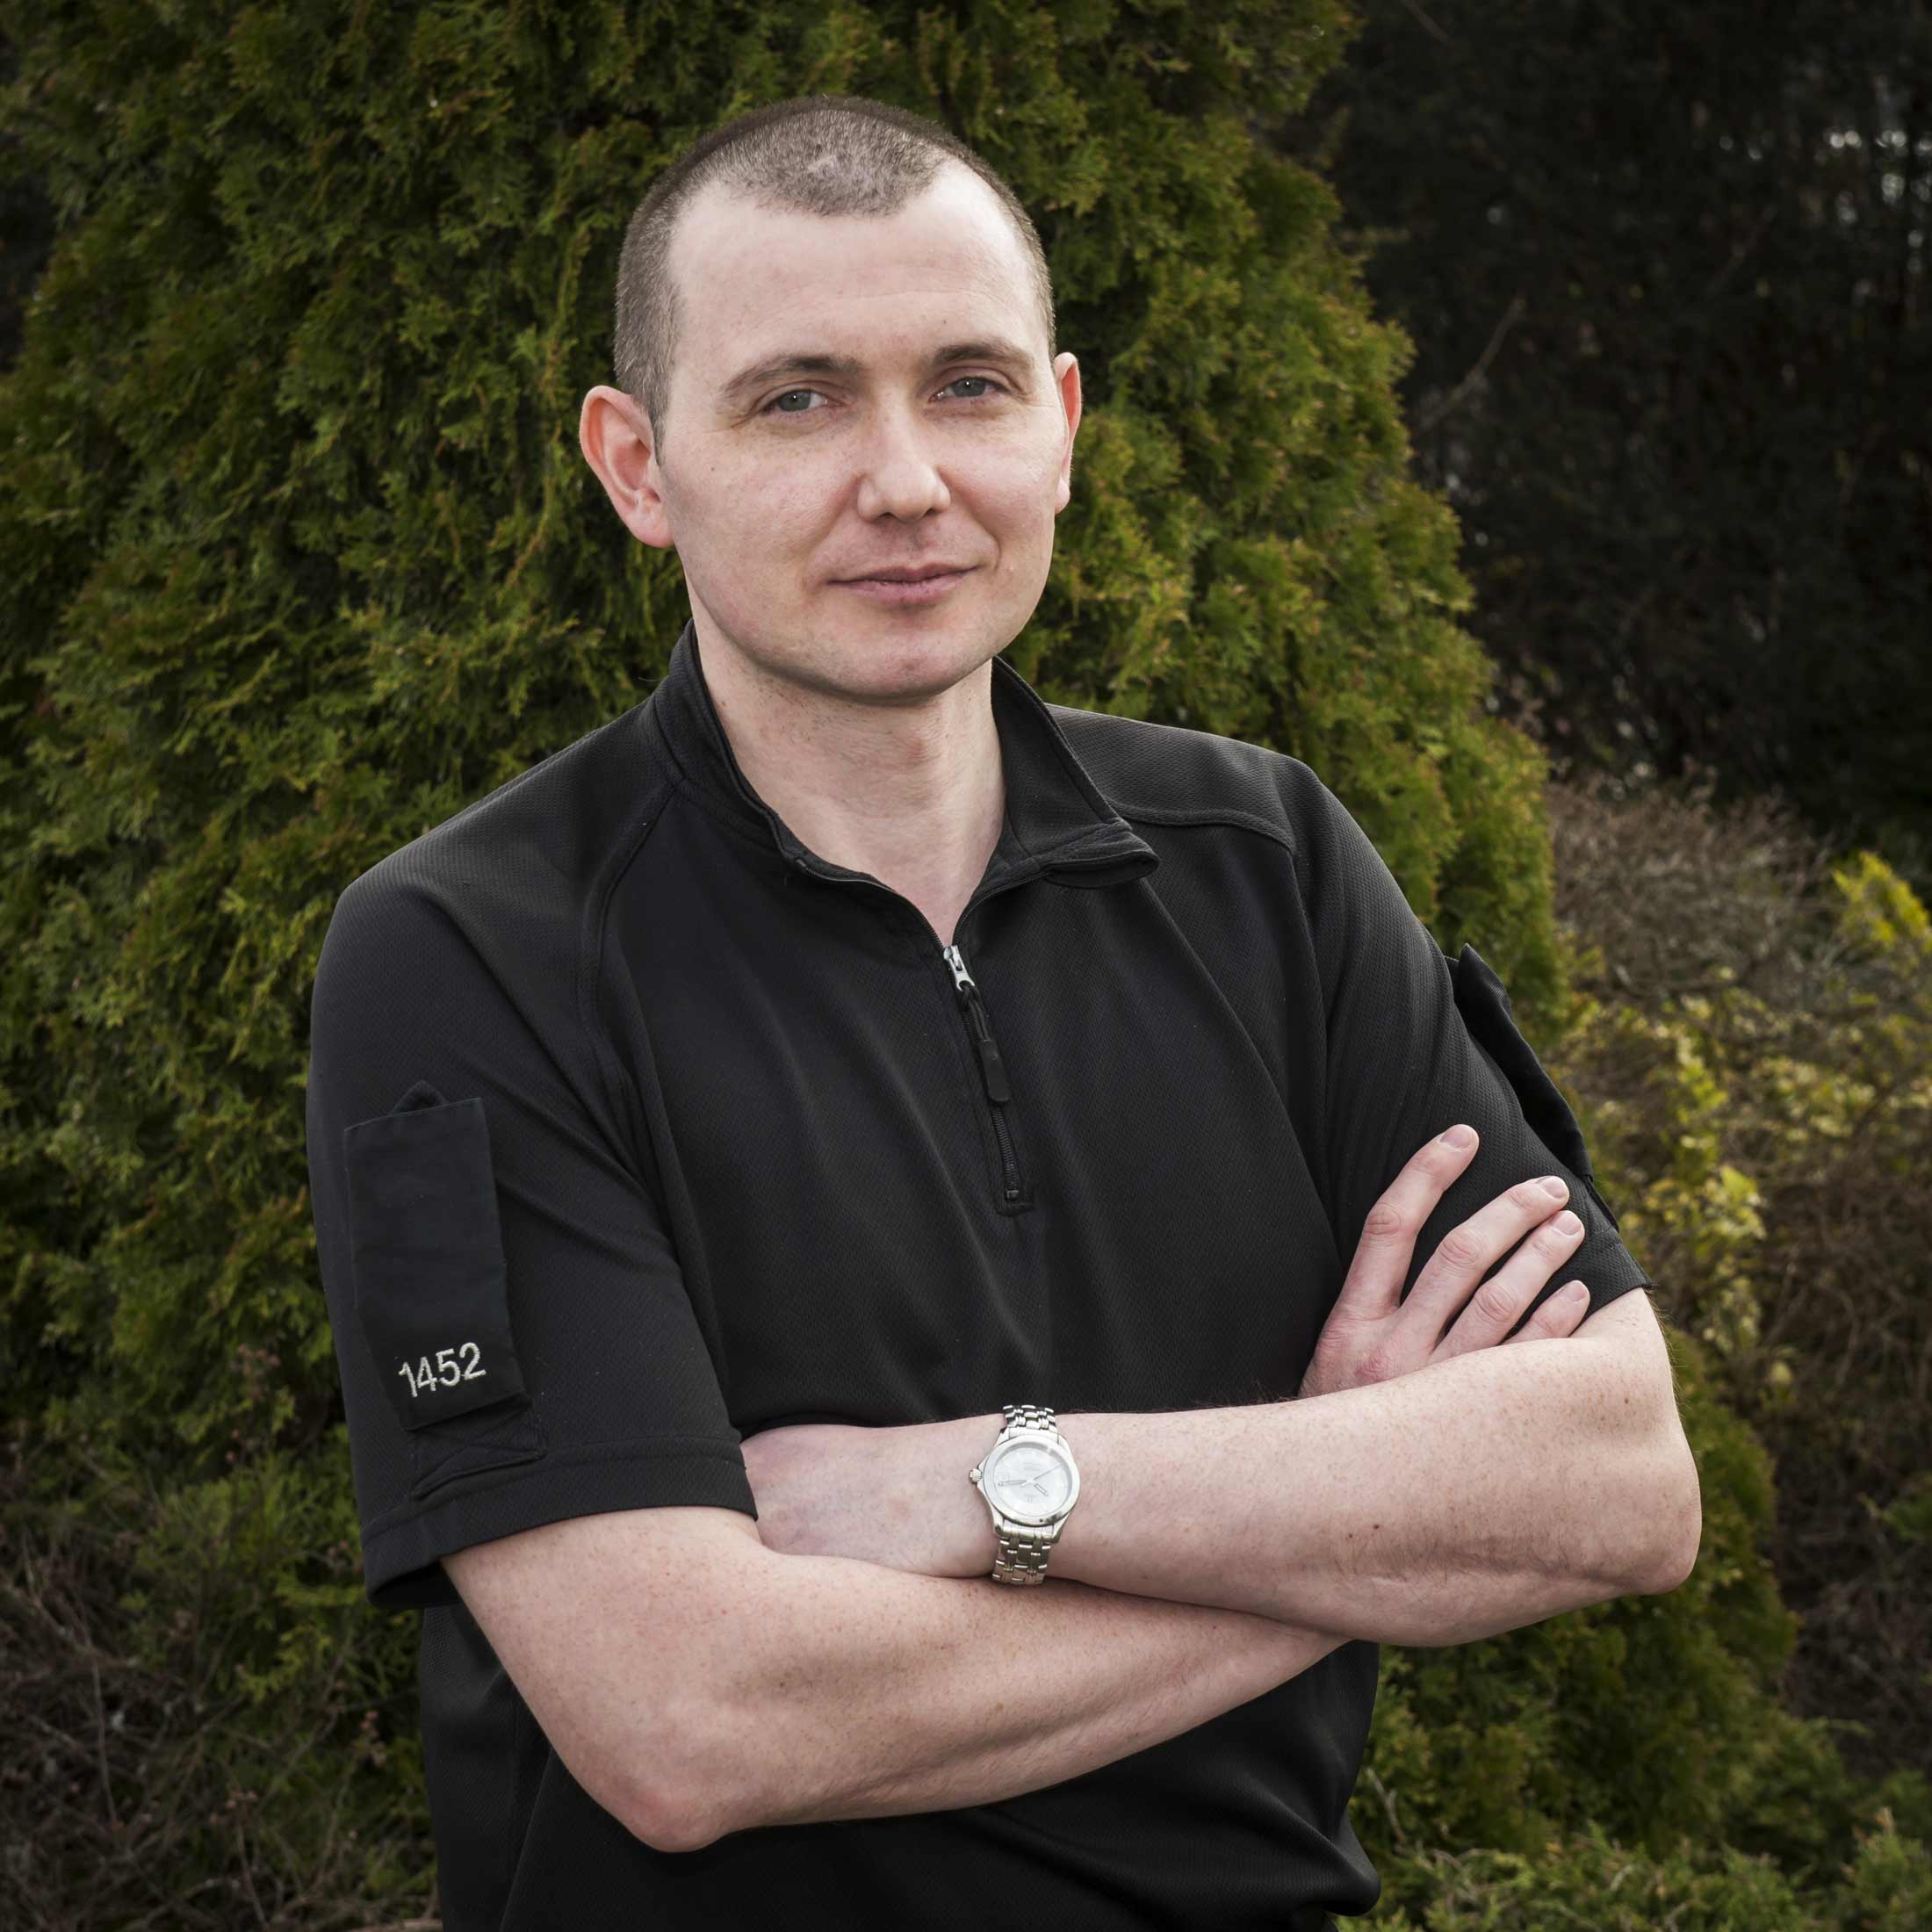 PC David Mackay, a Wildlife Crime Officer on North Yorkshire Police’s Rural Taskforce